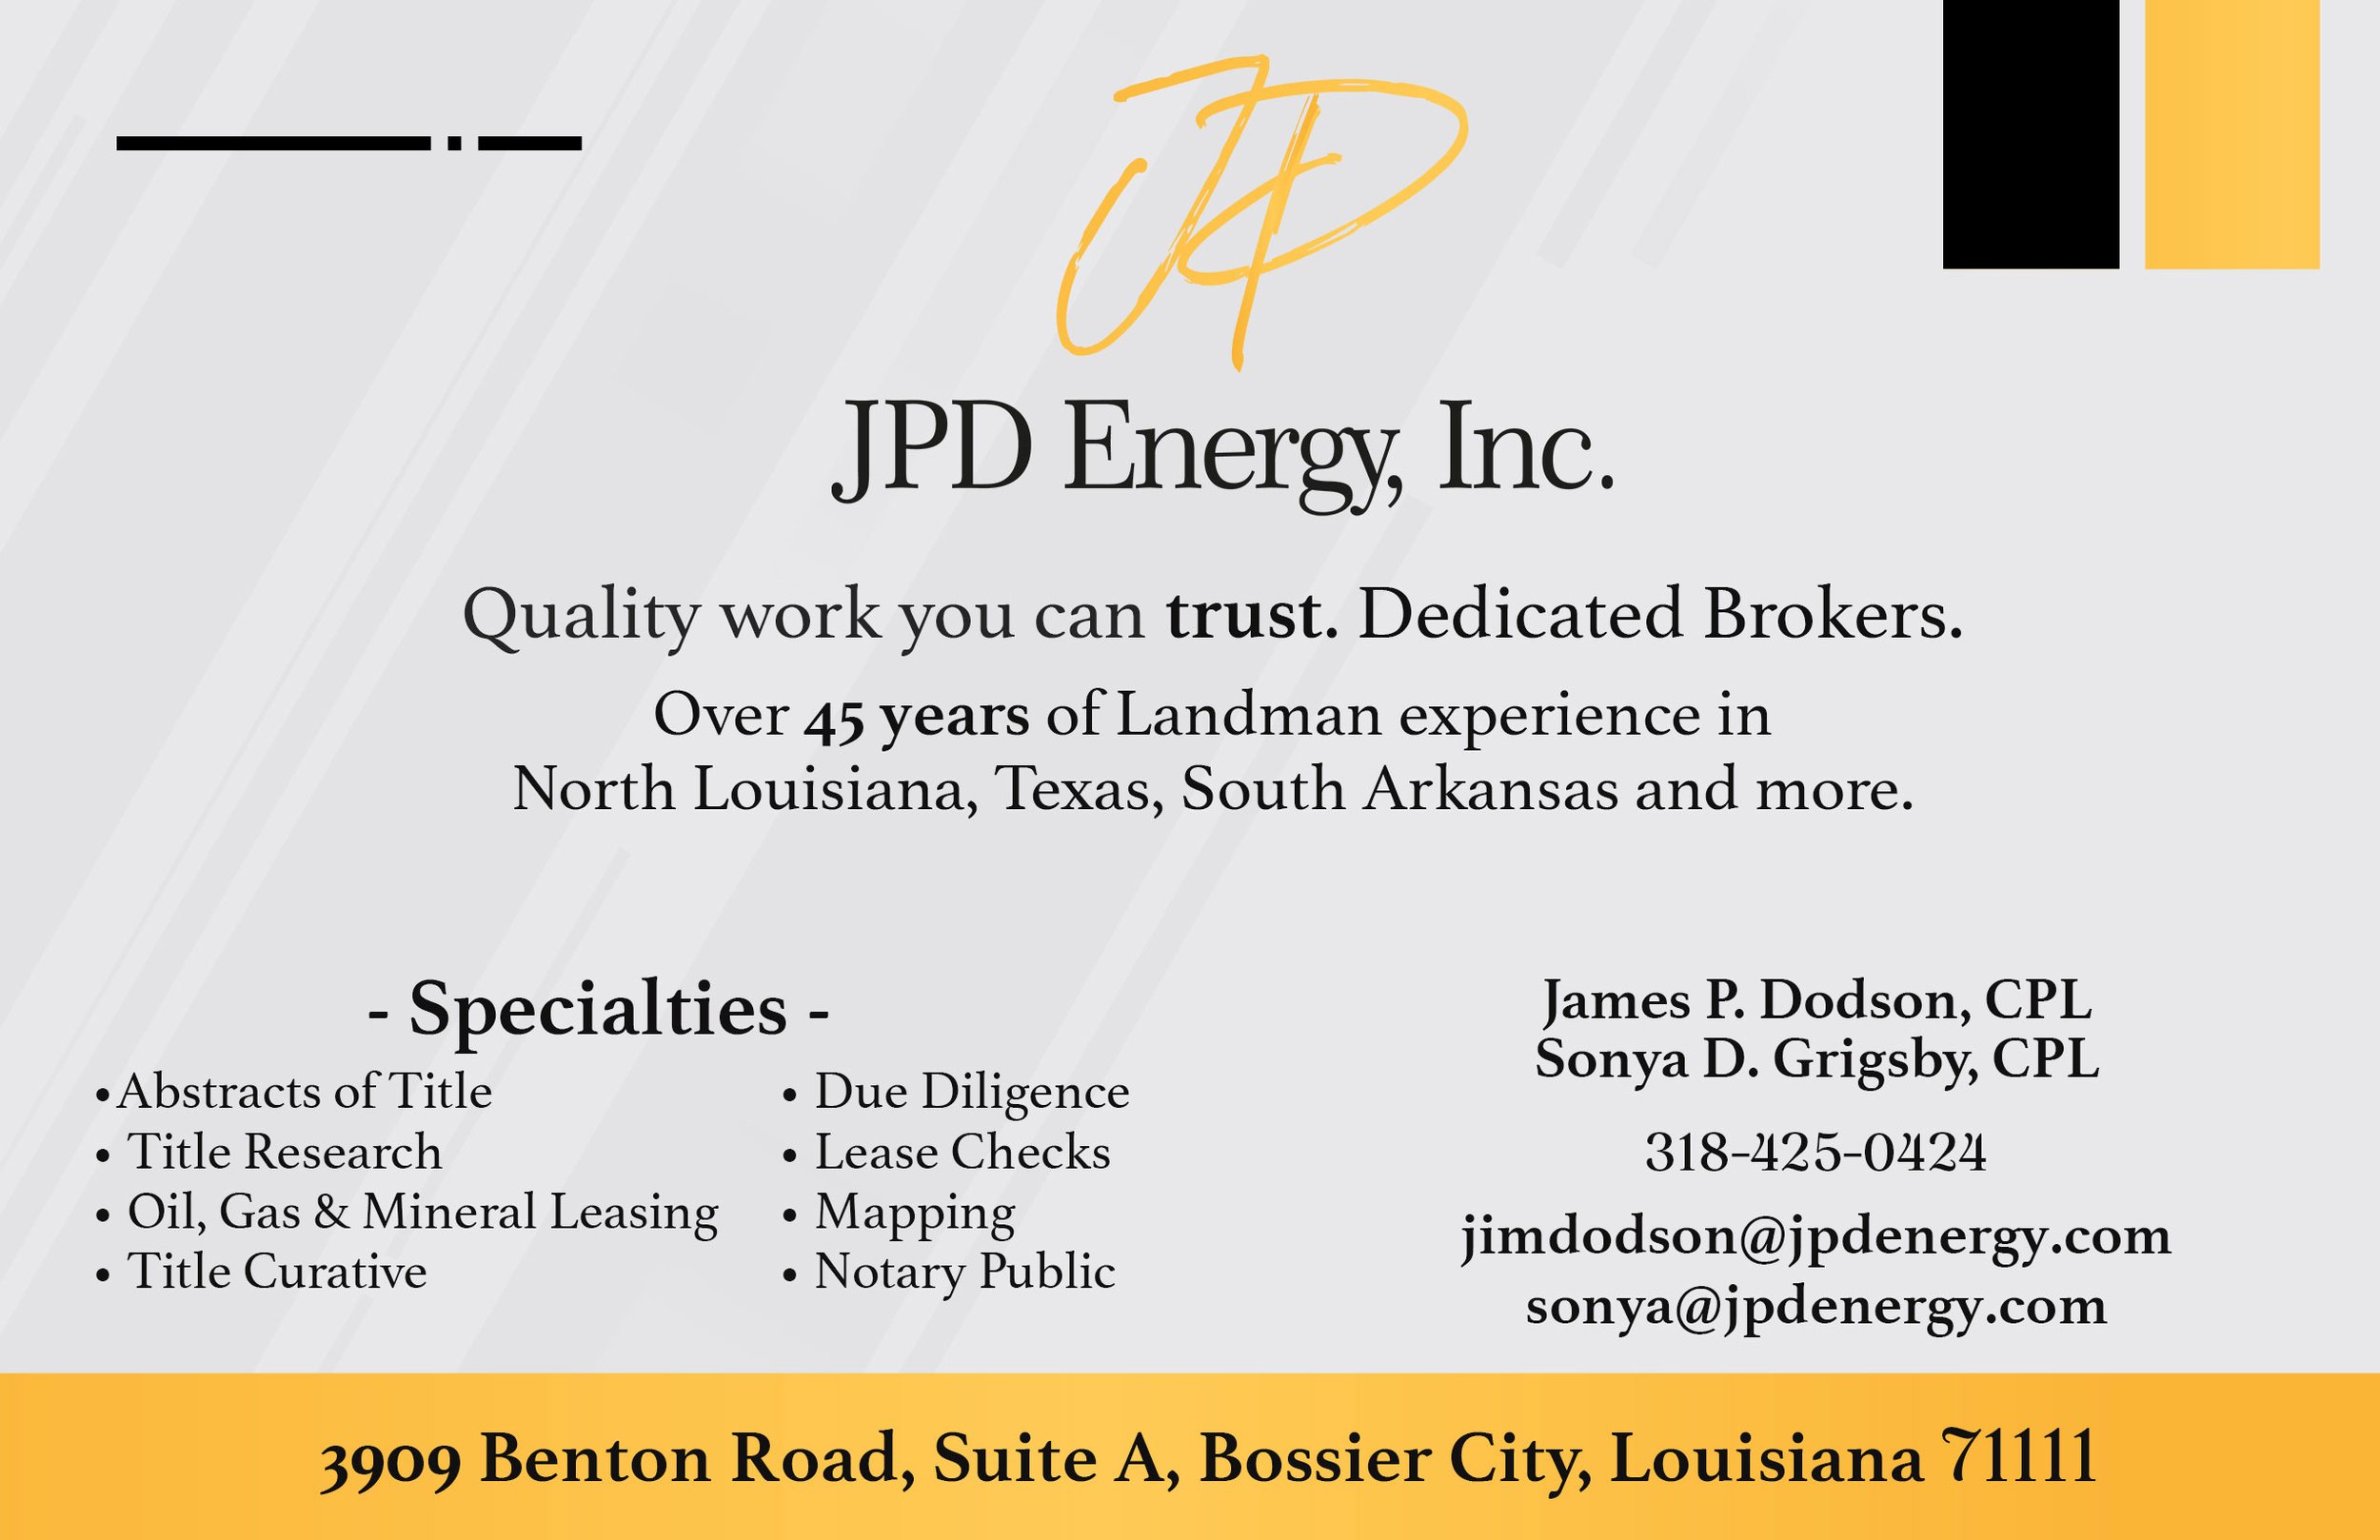 JPD Energy Ad.jpg